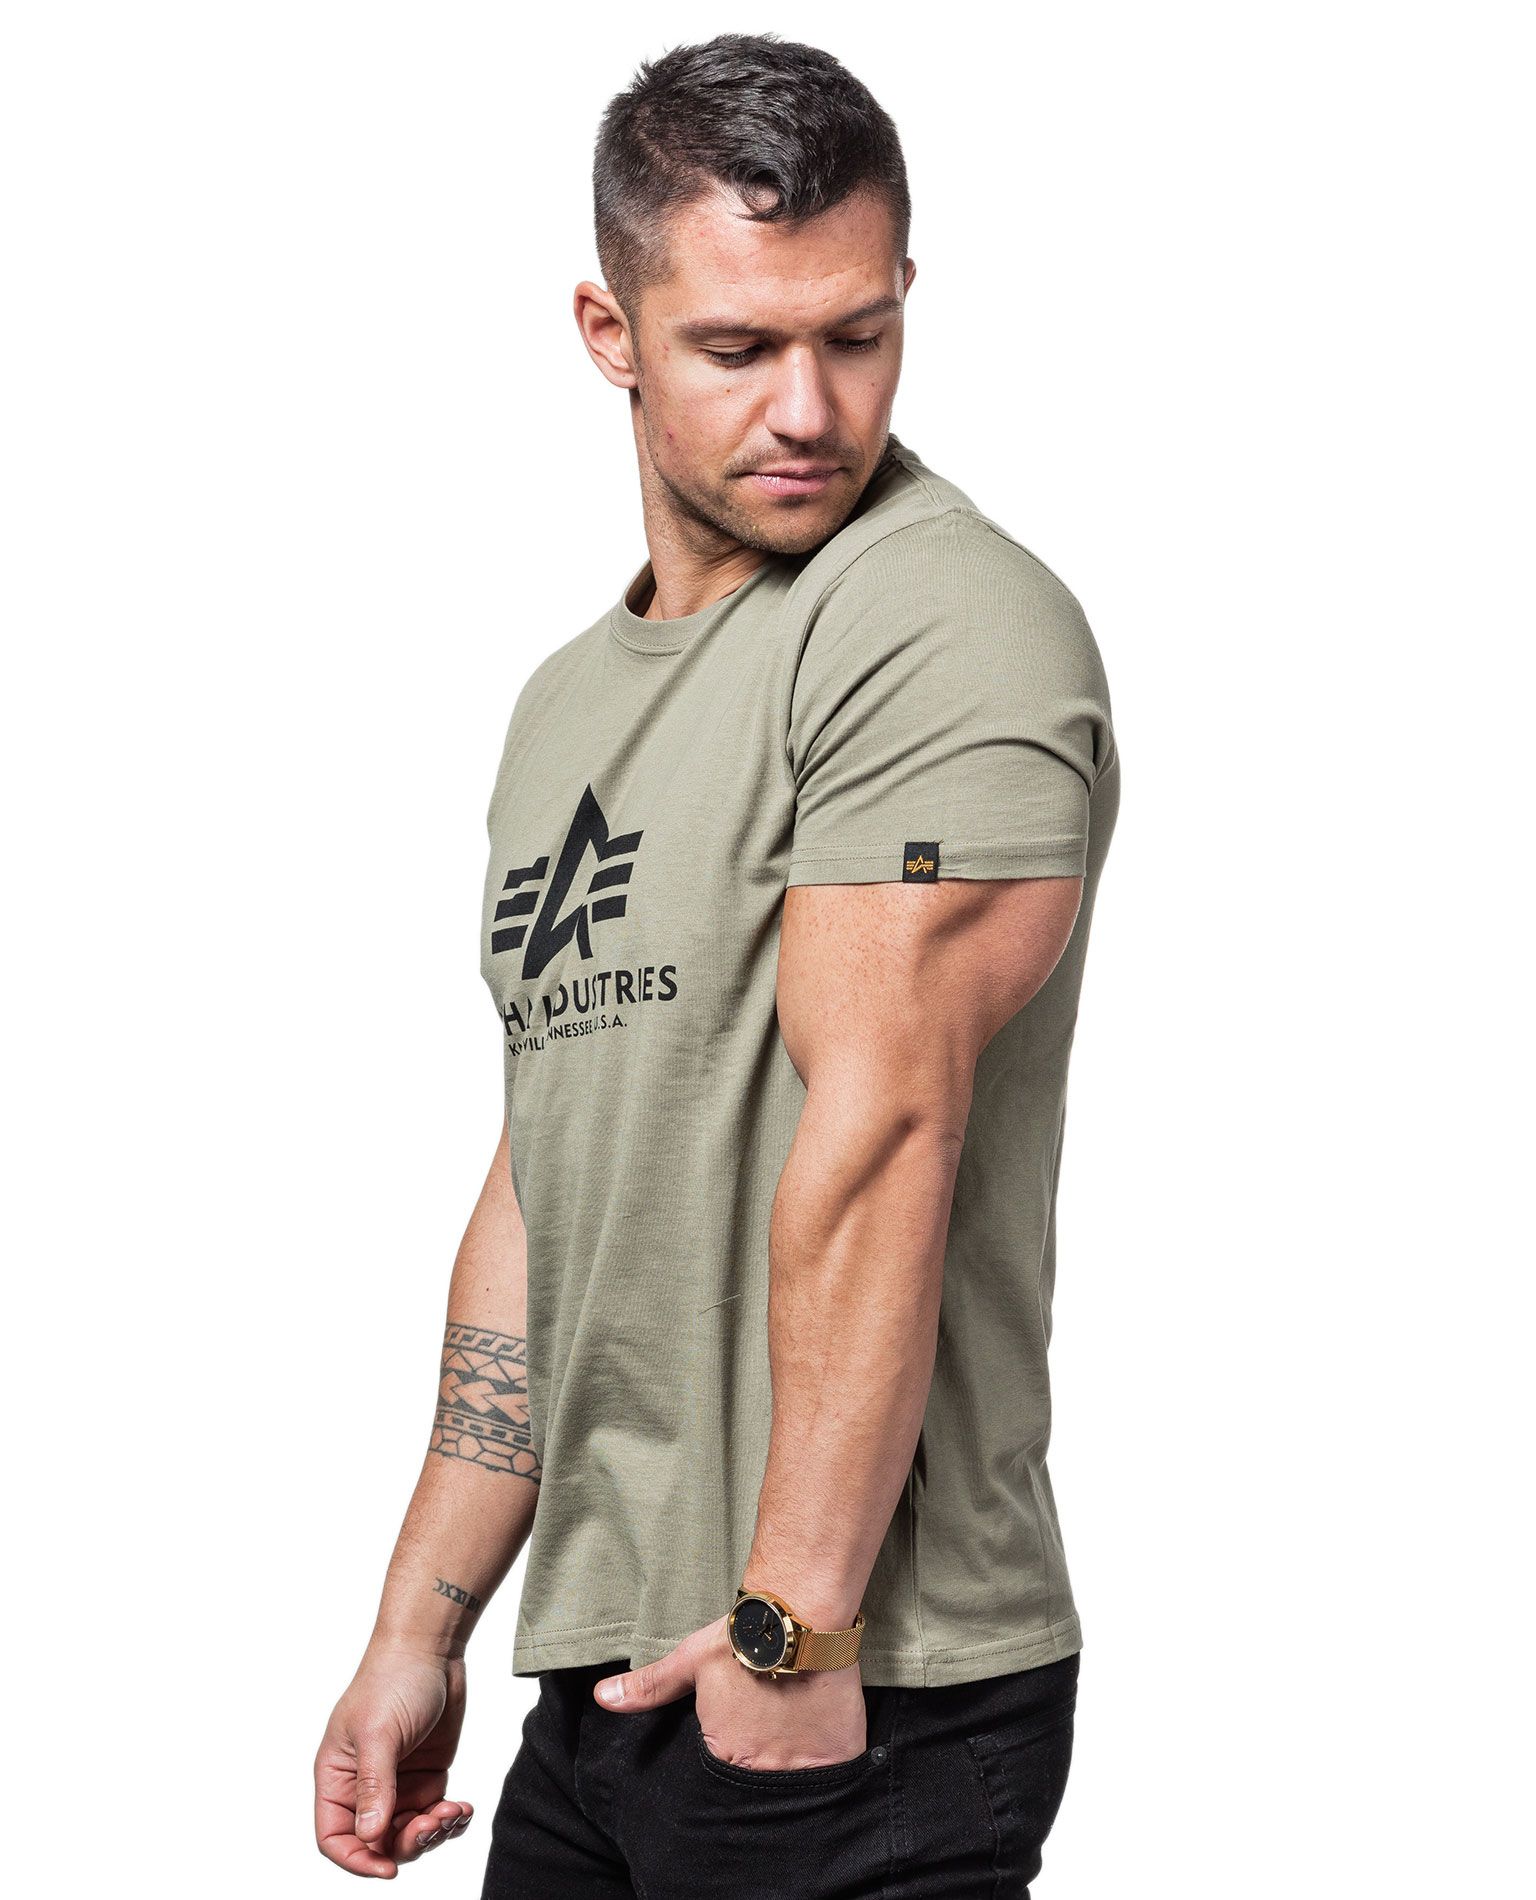 Alpha Industries t-shirt Basic Tank 126566 597 men's green color